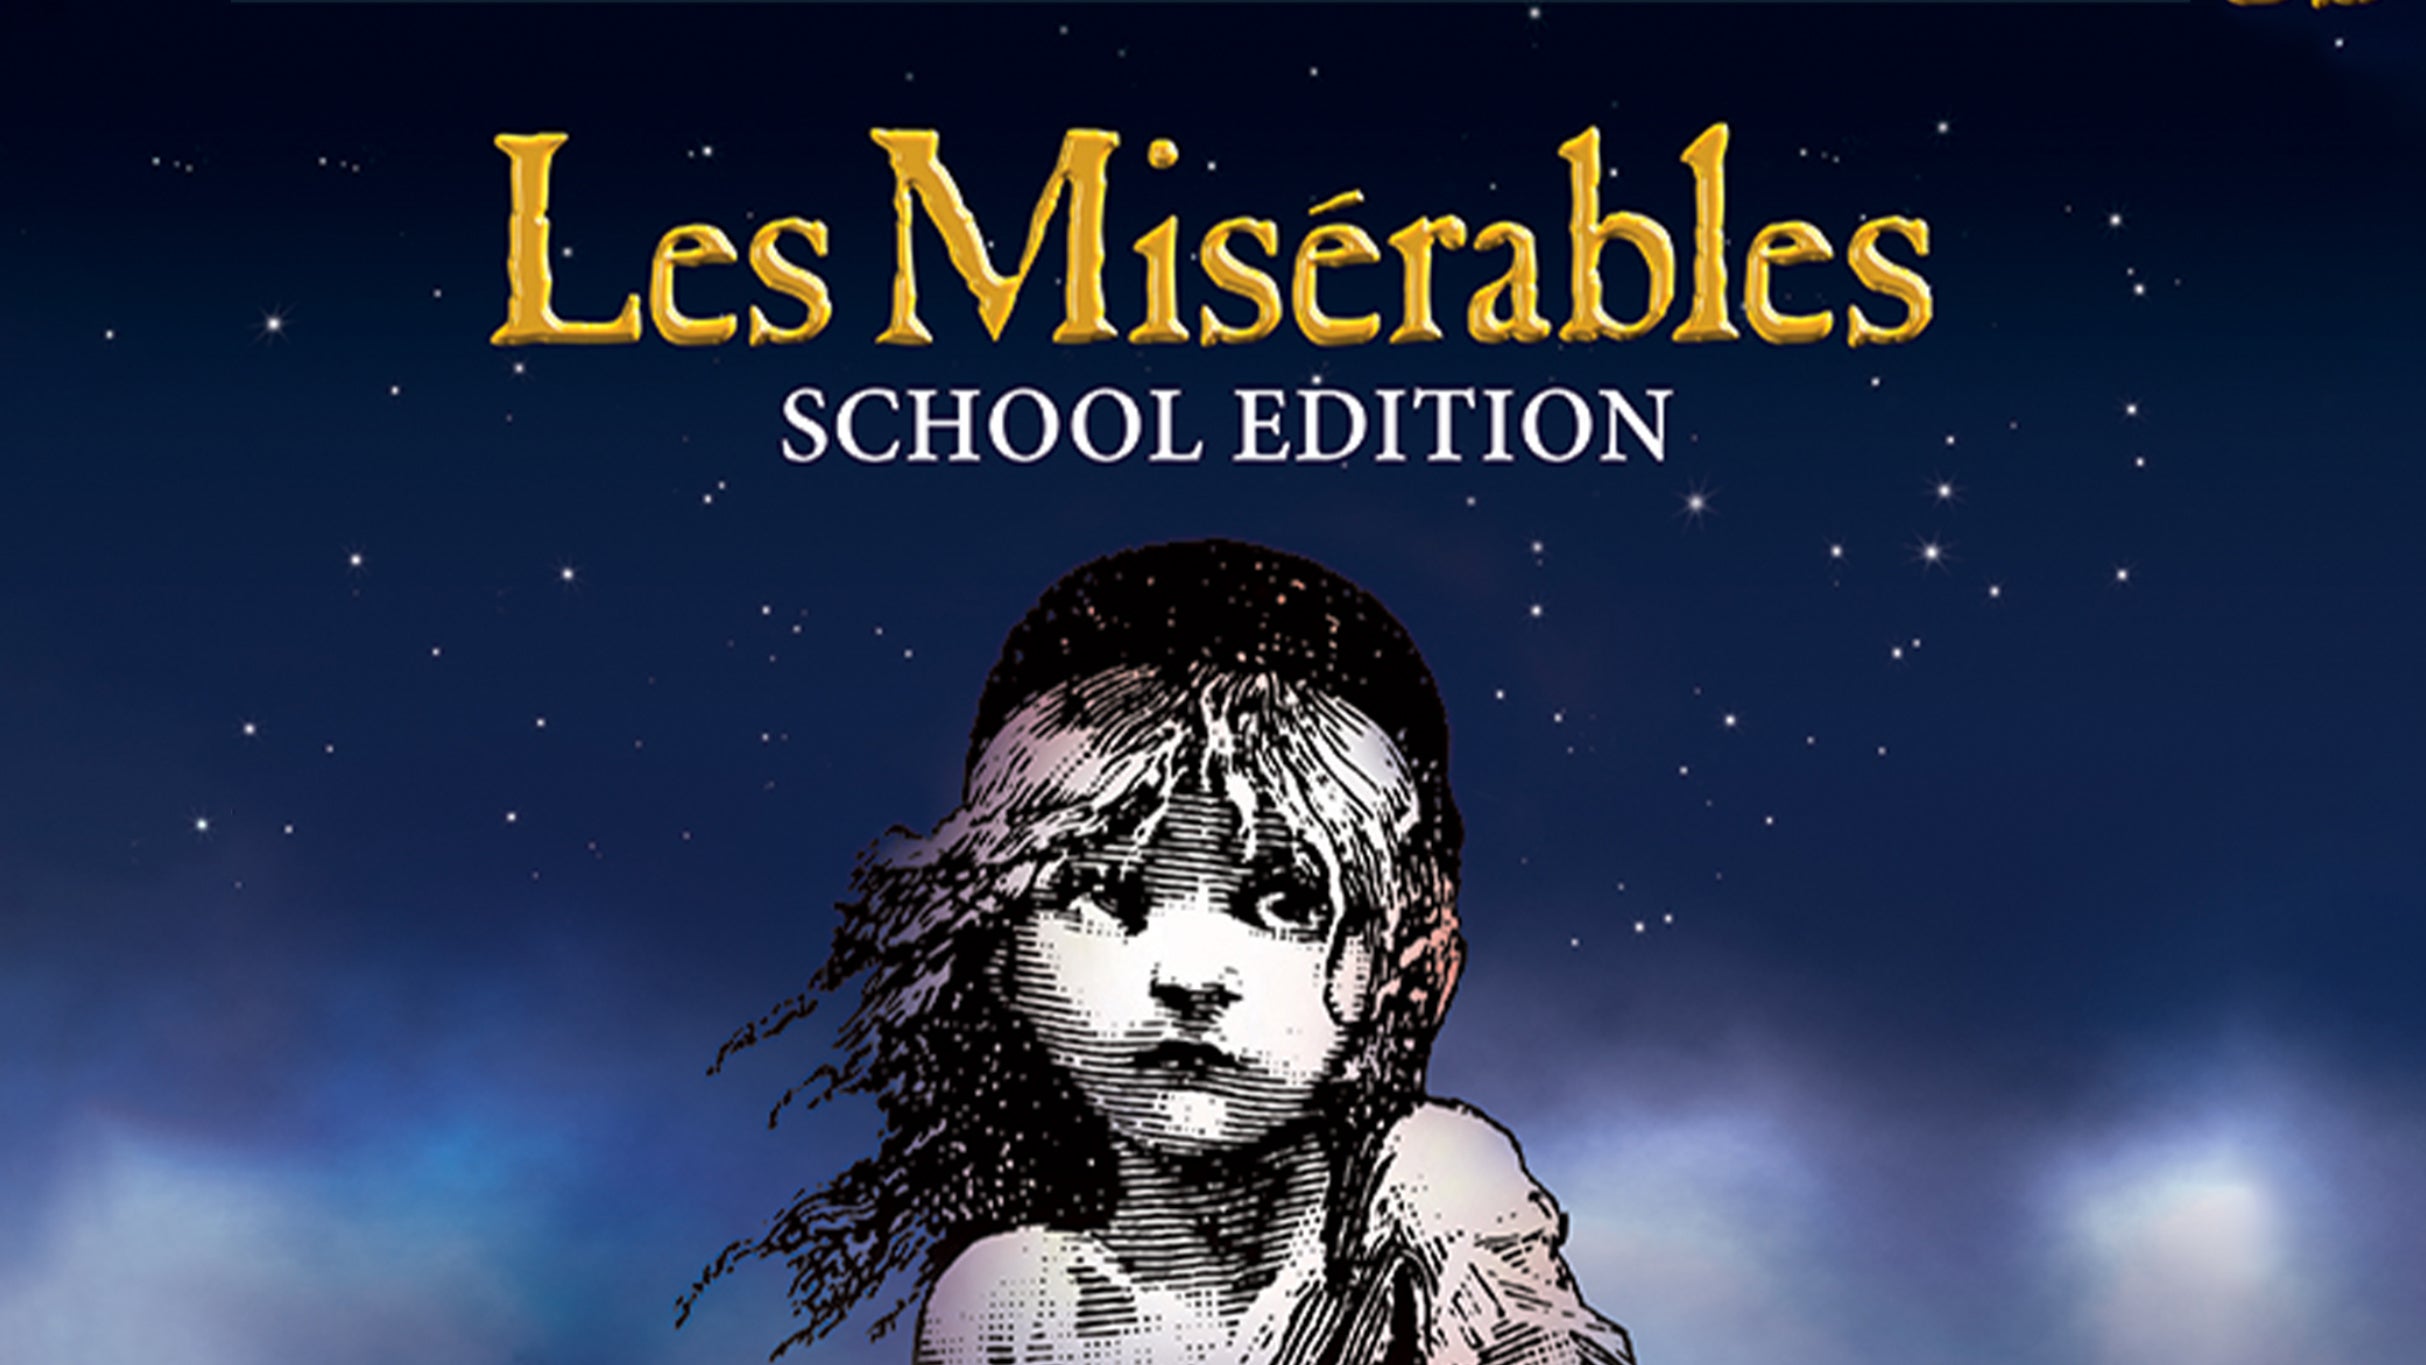 Les Miserables School Edition presale information on freepresalepasswords.com